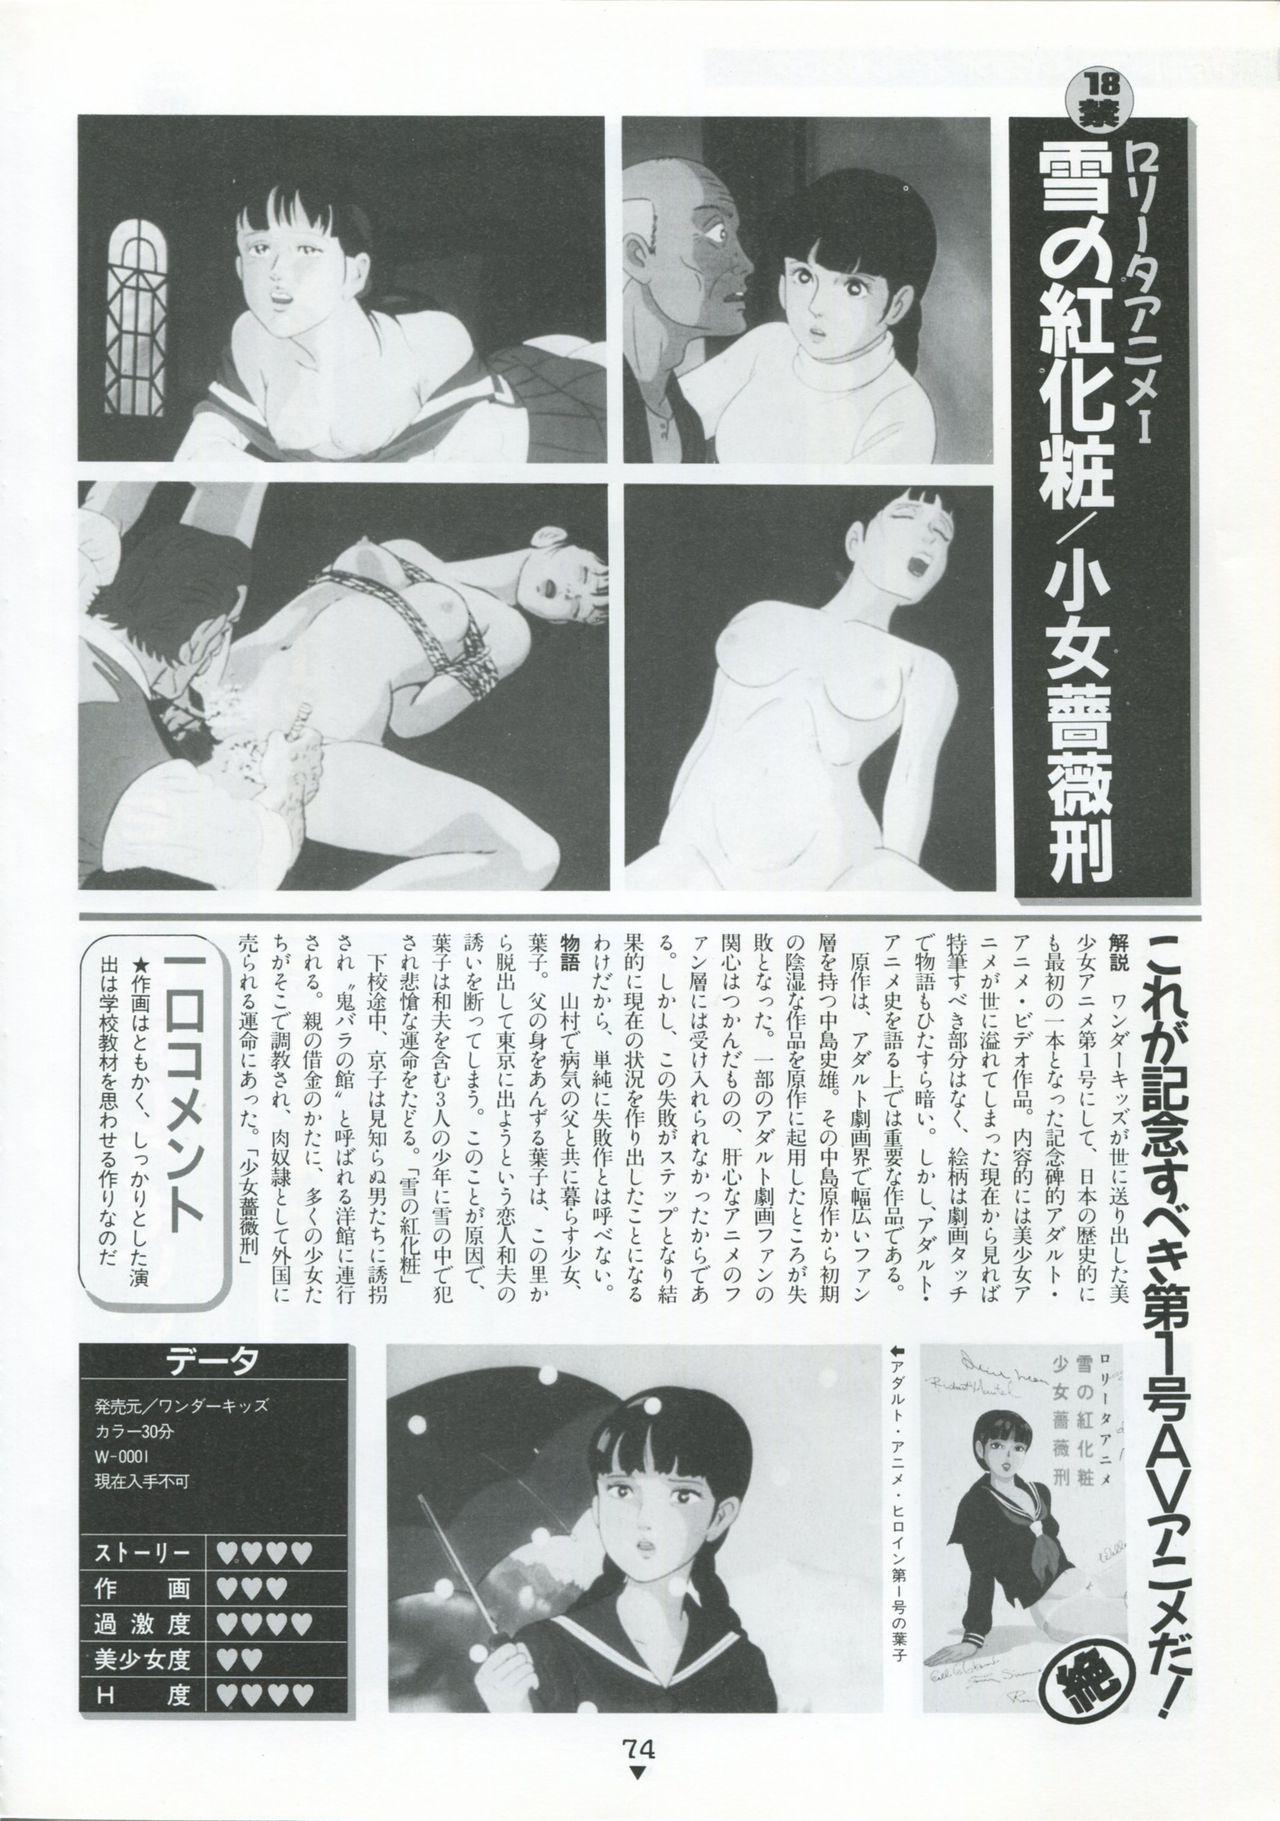 Bishoujo Anime Daizenshuu - Adult Animation Video Catalog 1991 69